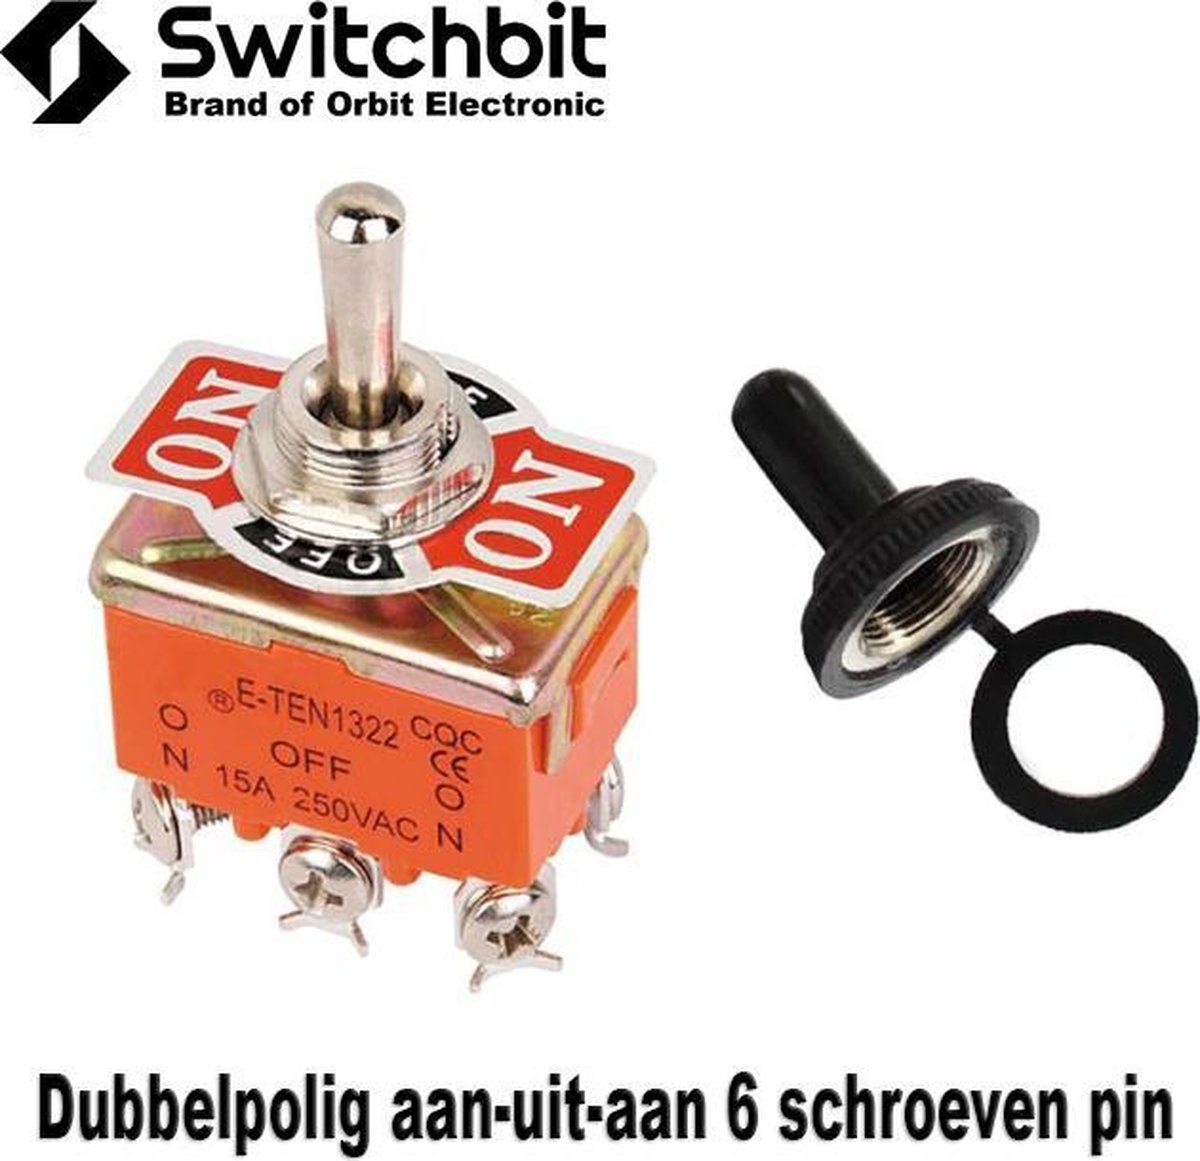 SwitchBit - Tuimelswitch dubbelpolig aan-uit-aan - 15A/250V